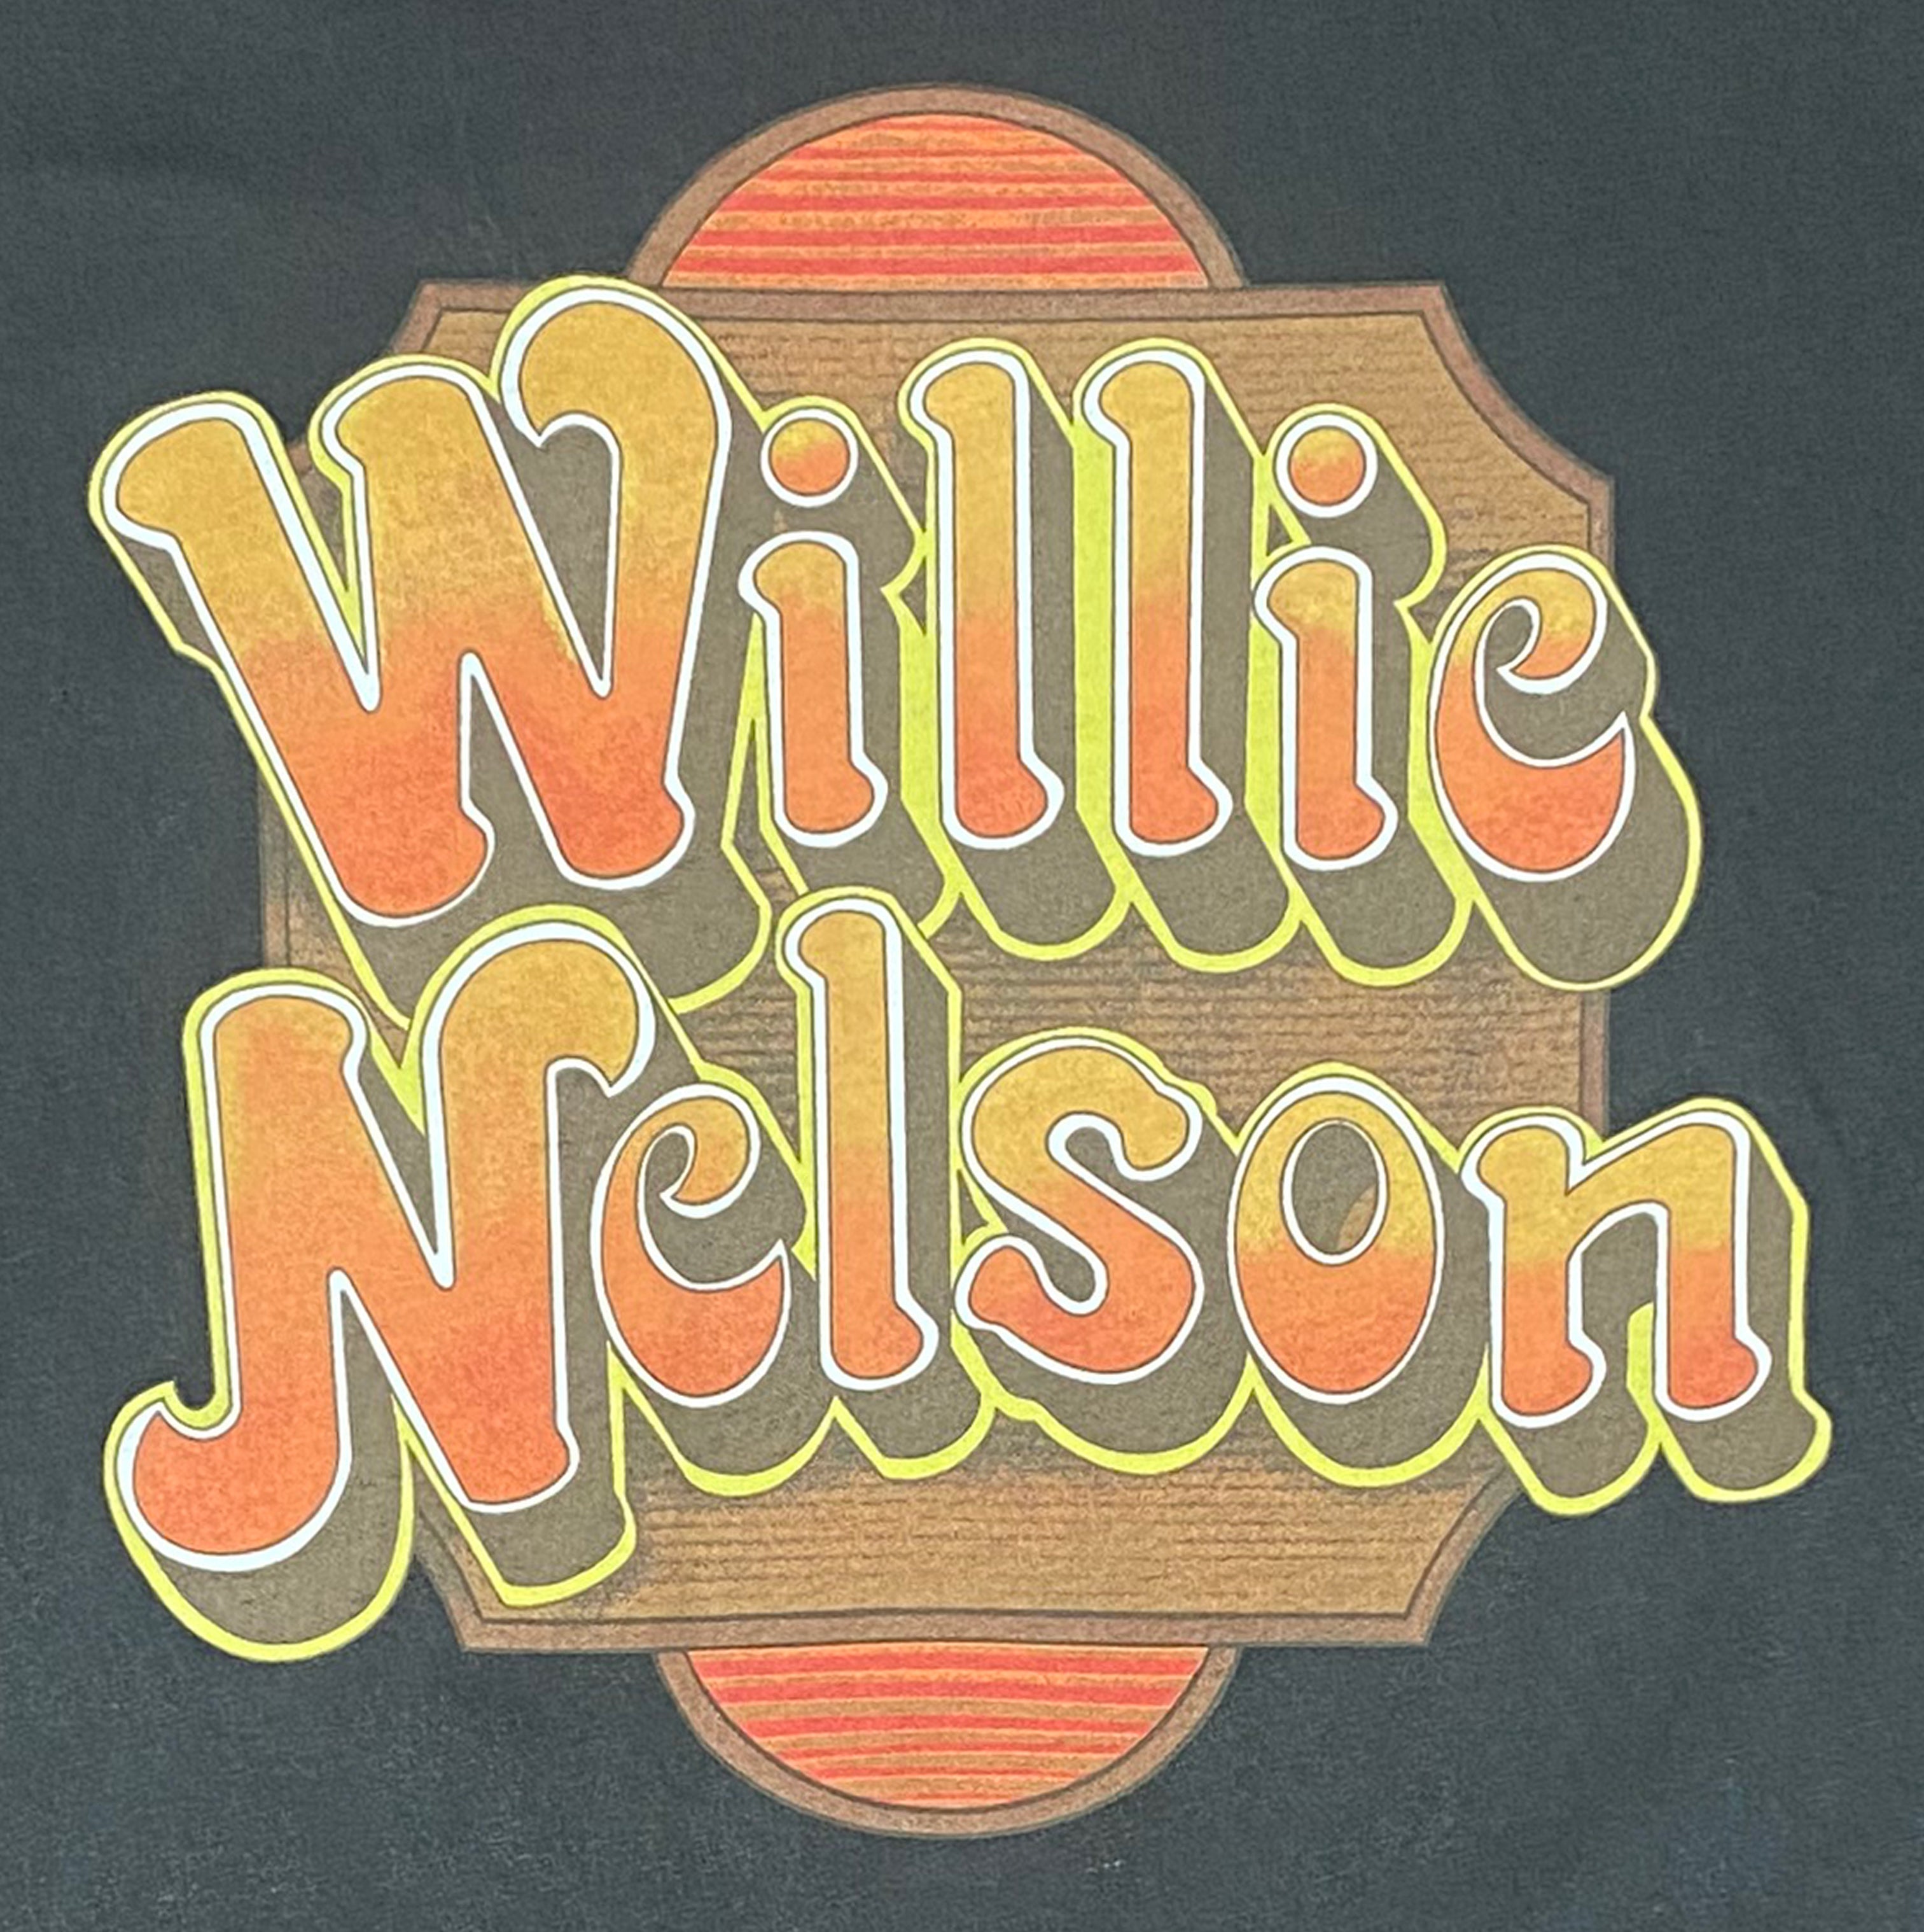 Willie Nelson Sign Unisex T Shirt